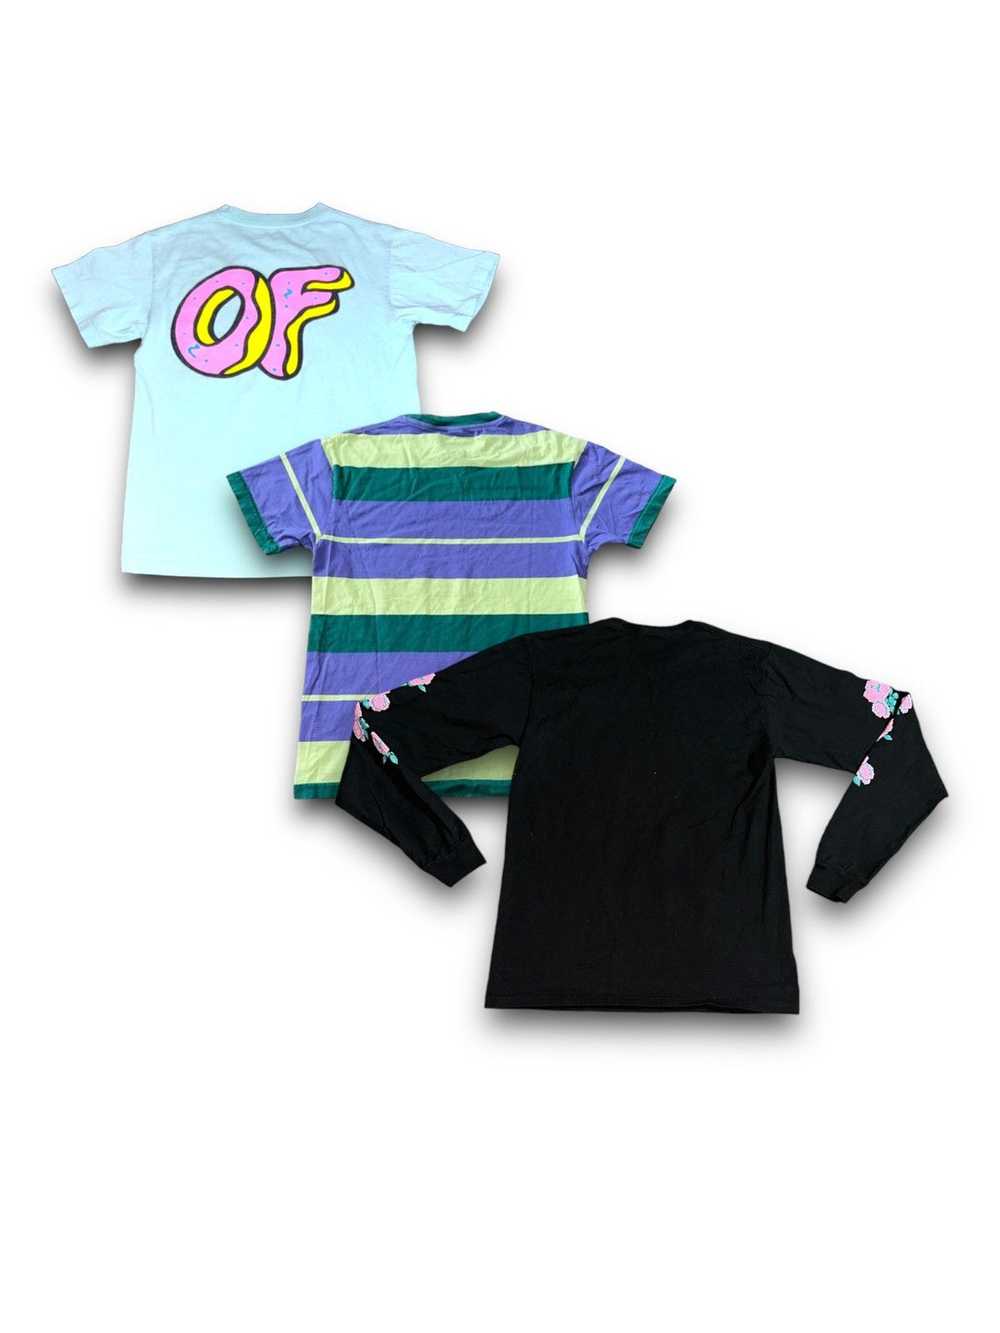 Odd Future Odd future OFWGKTA t-shirt bundle - image 3